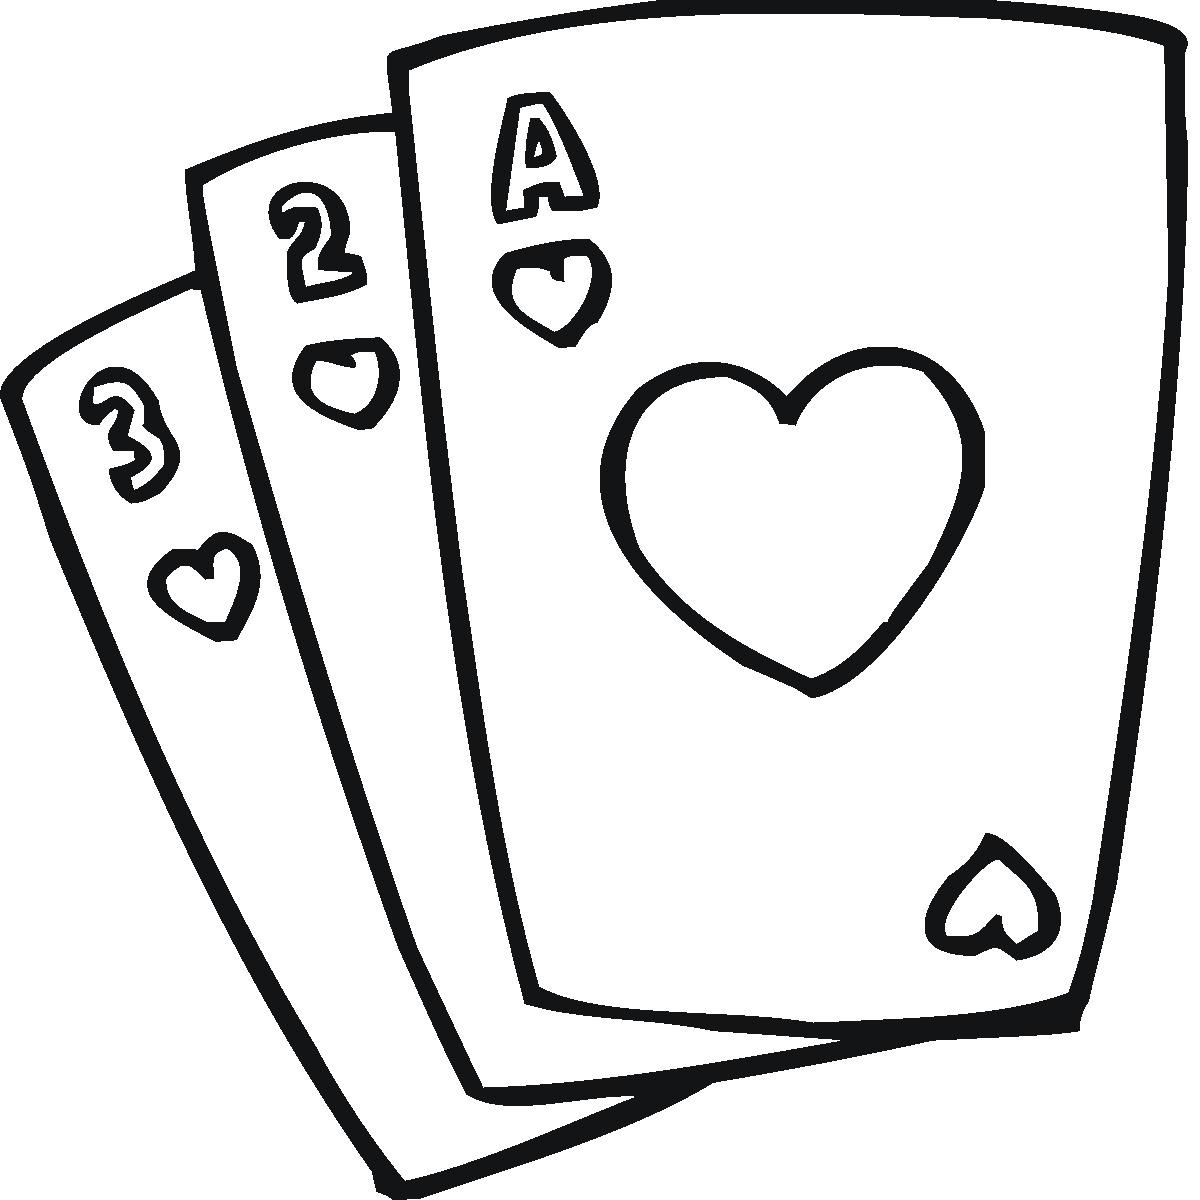 Clip Art Playing Cards - Blogsbeta